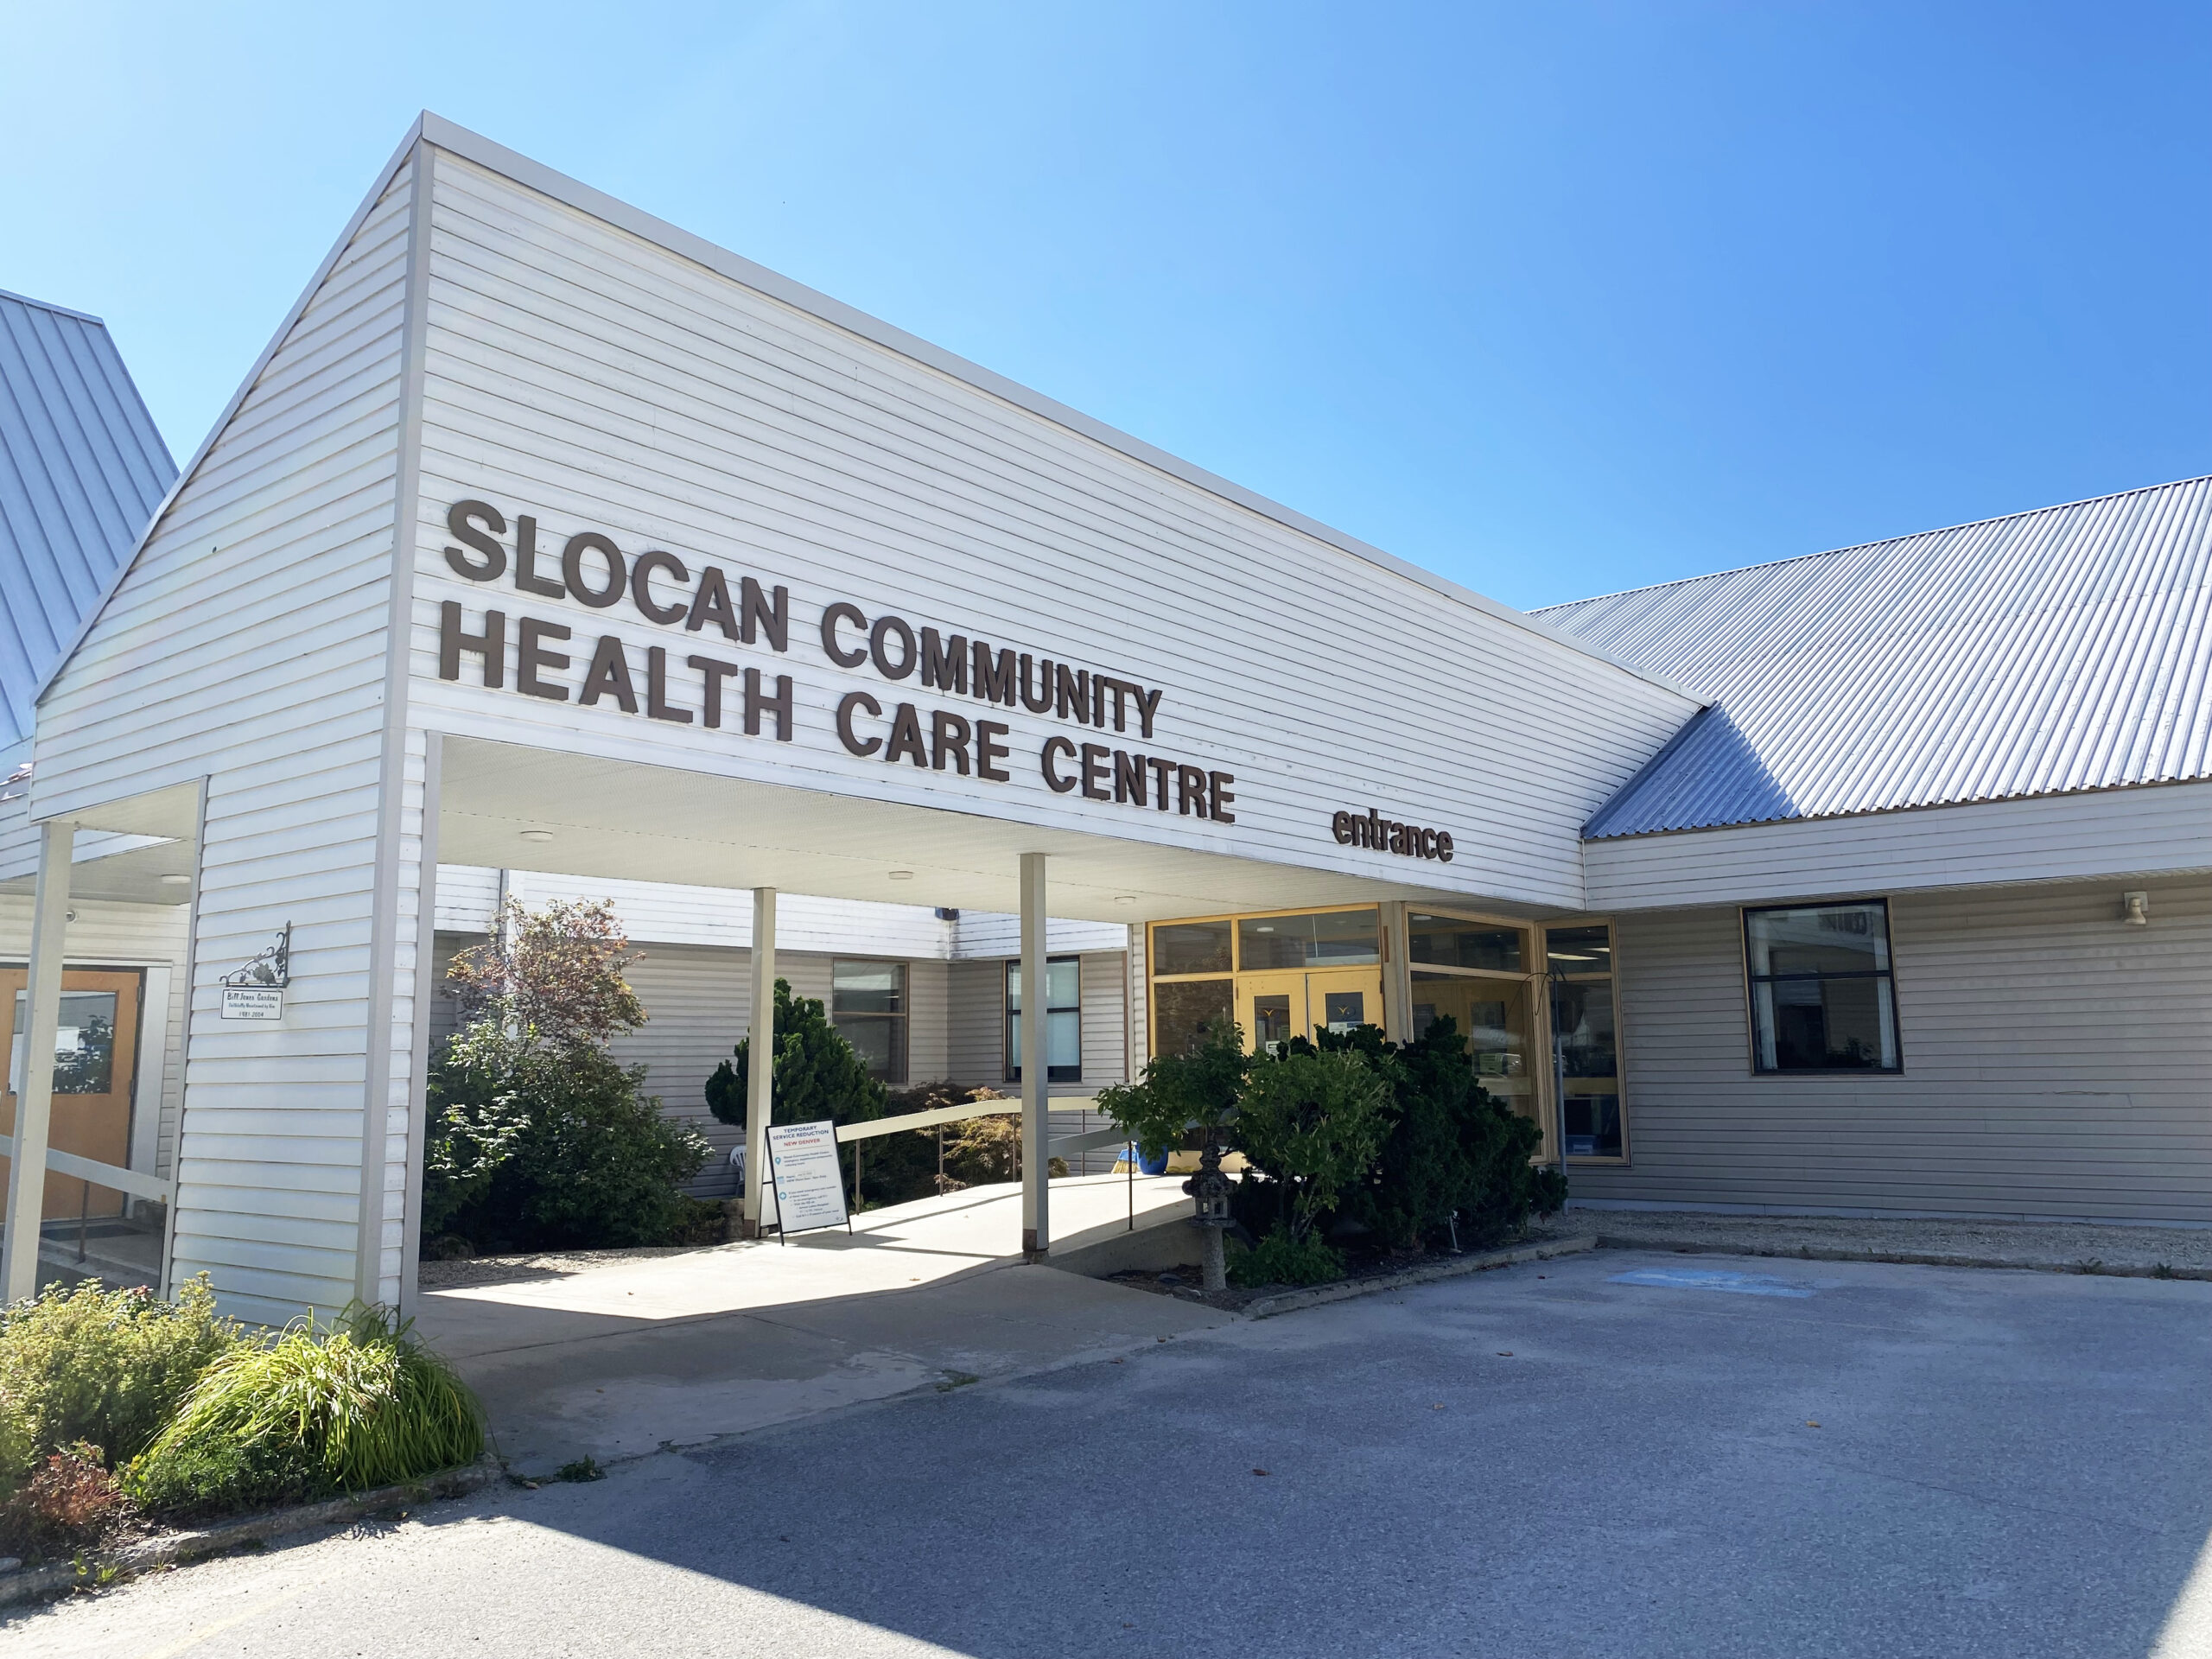 Interior Health announces temporary service interruption at Slocan Community Health Centre ER